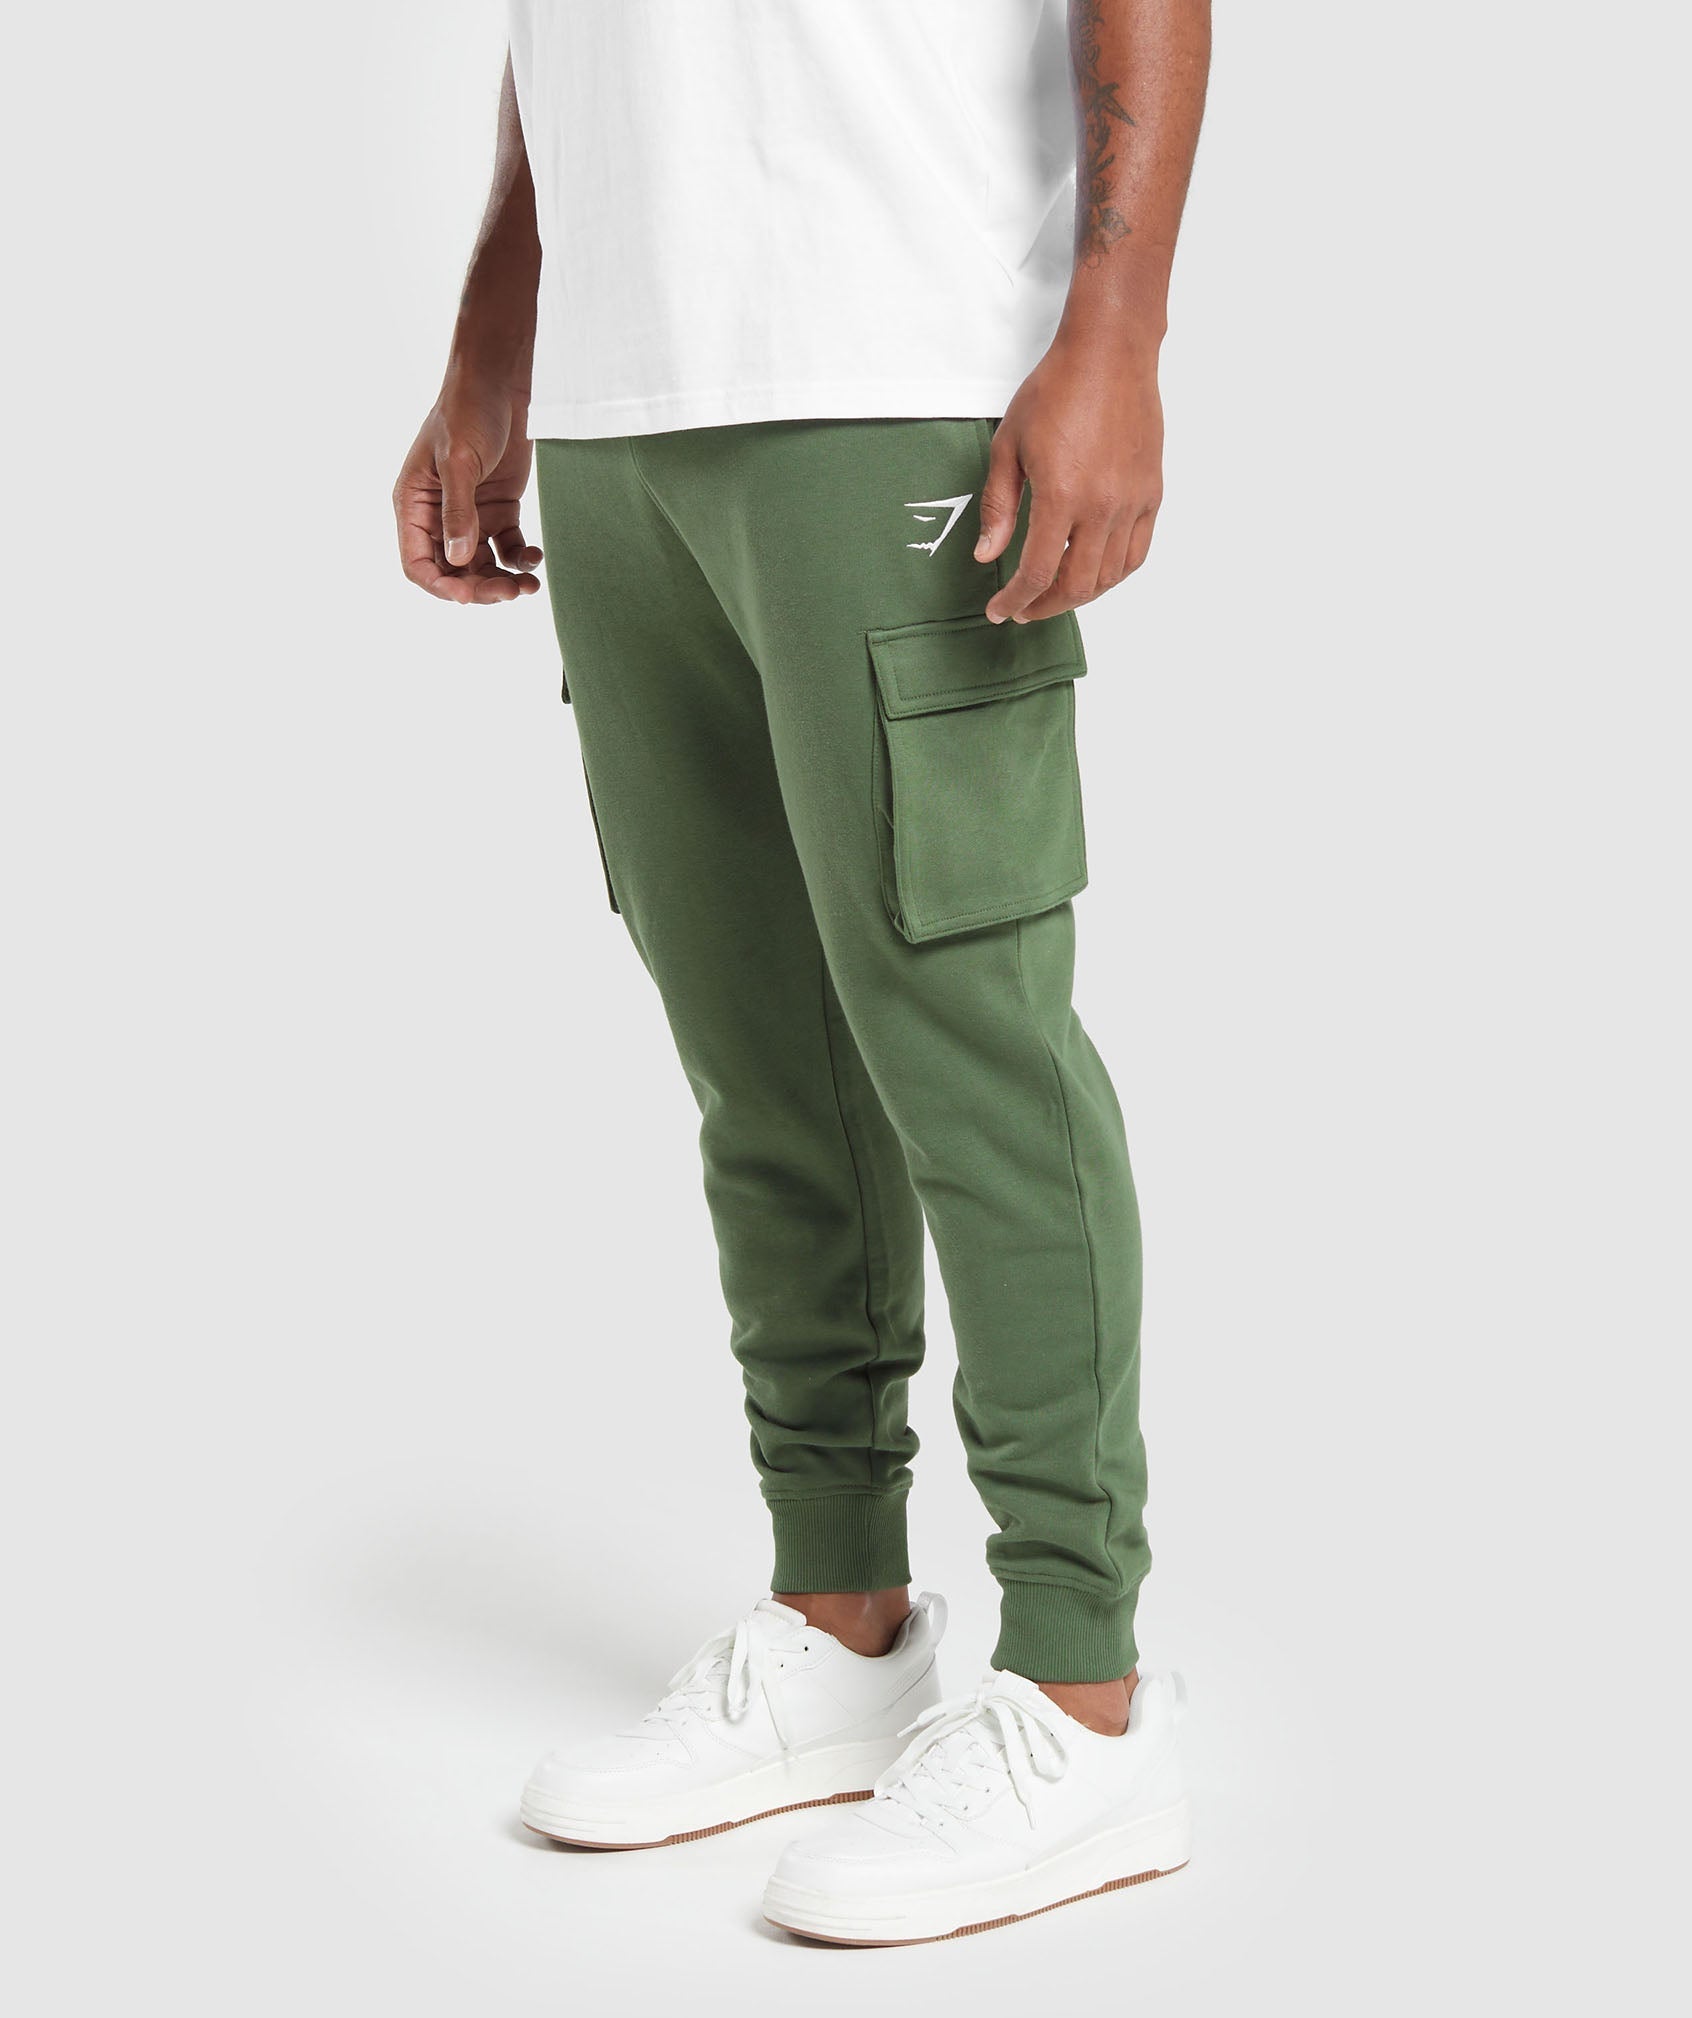 Nike Essentials Fleece cuffed cargo sweatpants in olive green, ASOS